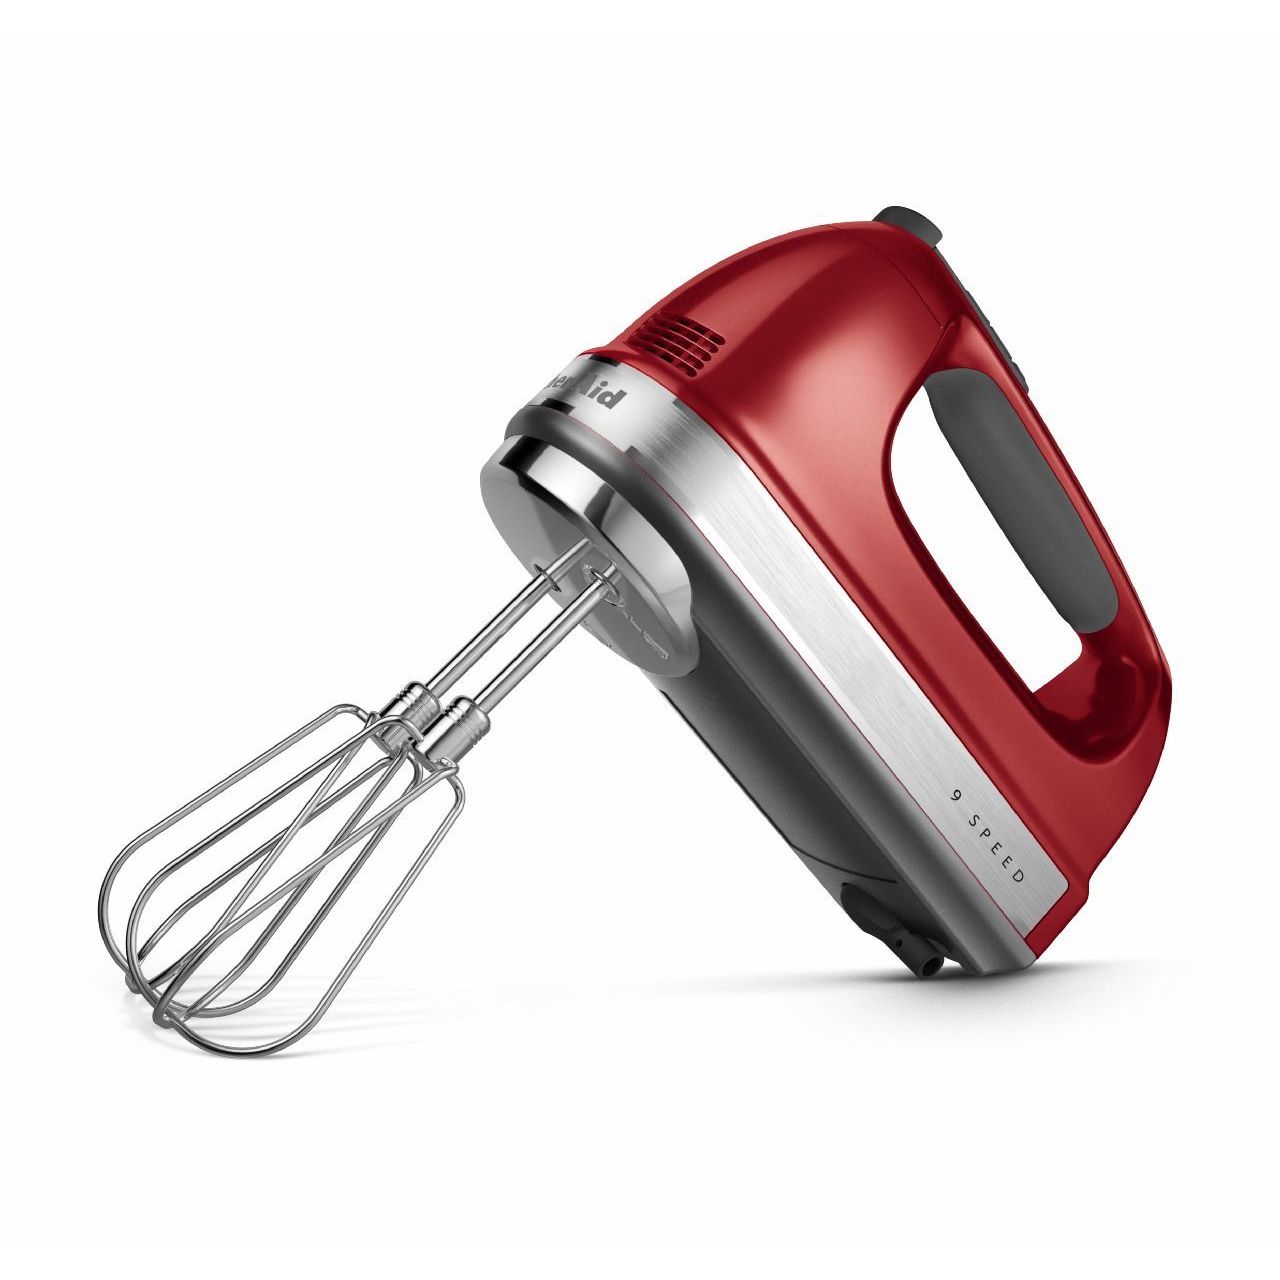 KitchenAid KHM926 9-Speed Hand Mixer - Candy Apple Red